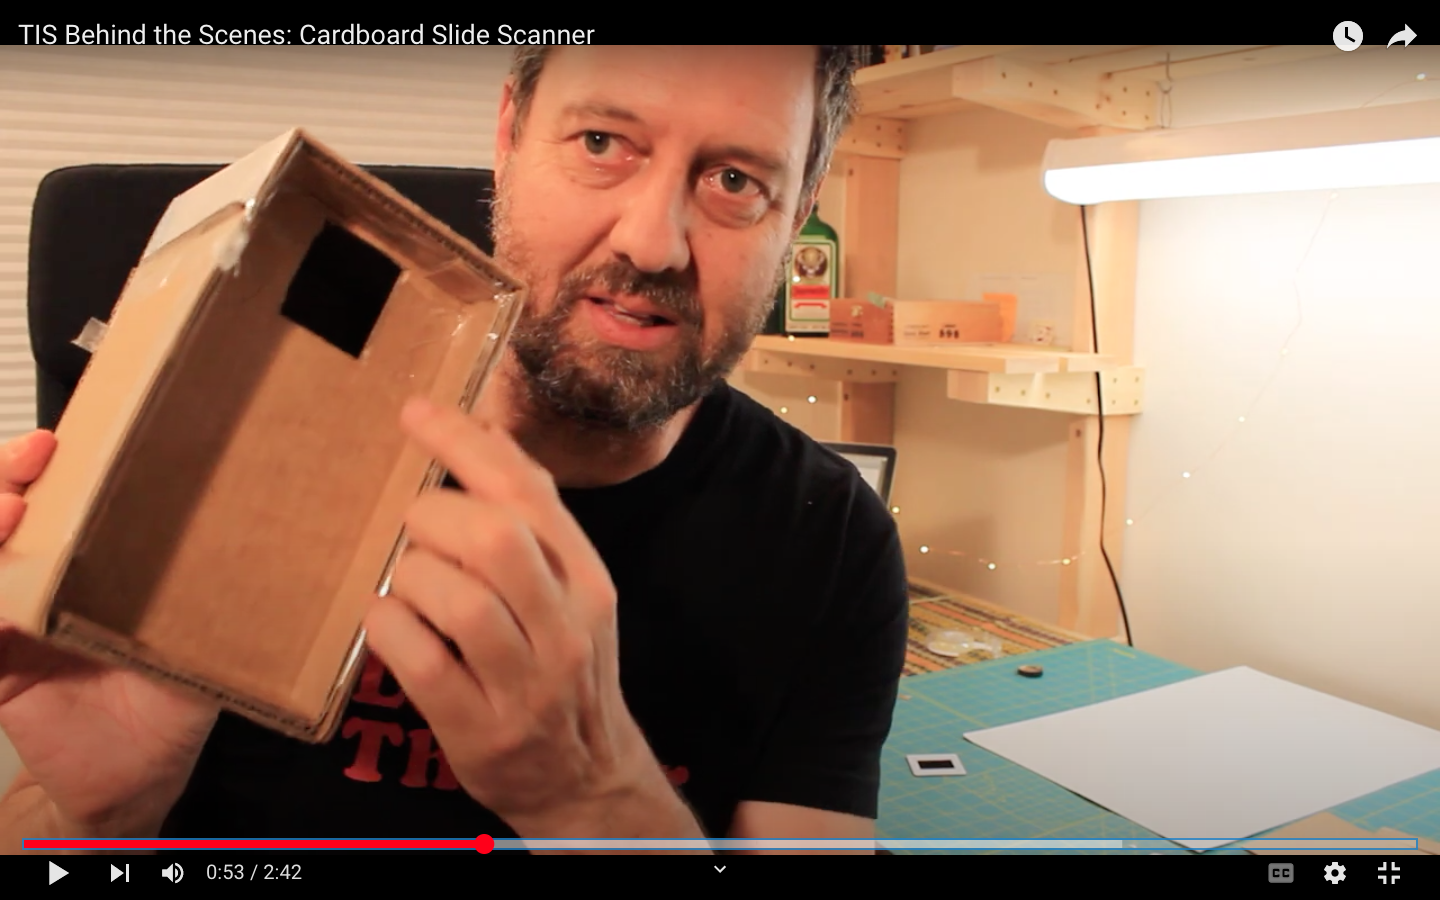 A Homemade Cardboard Slide Scanner